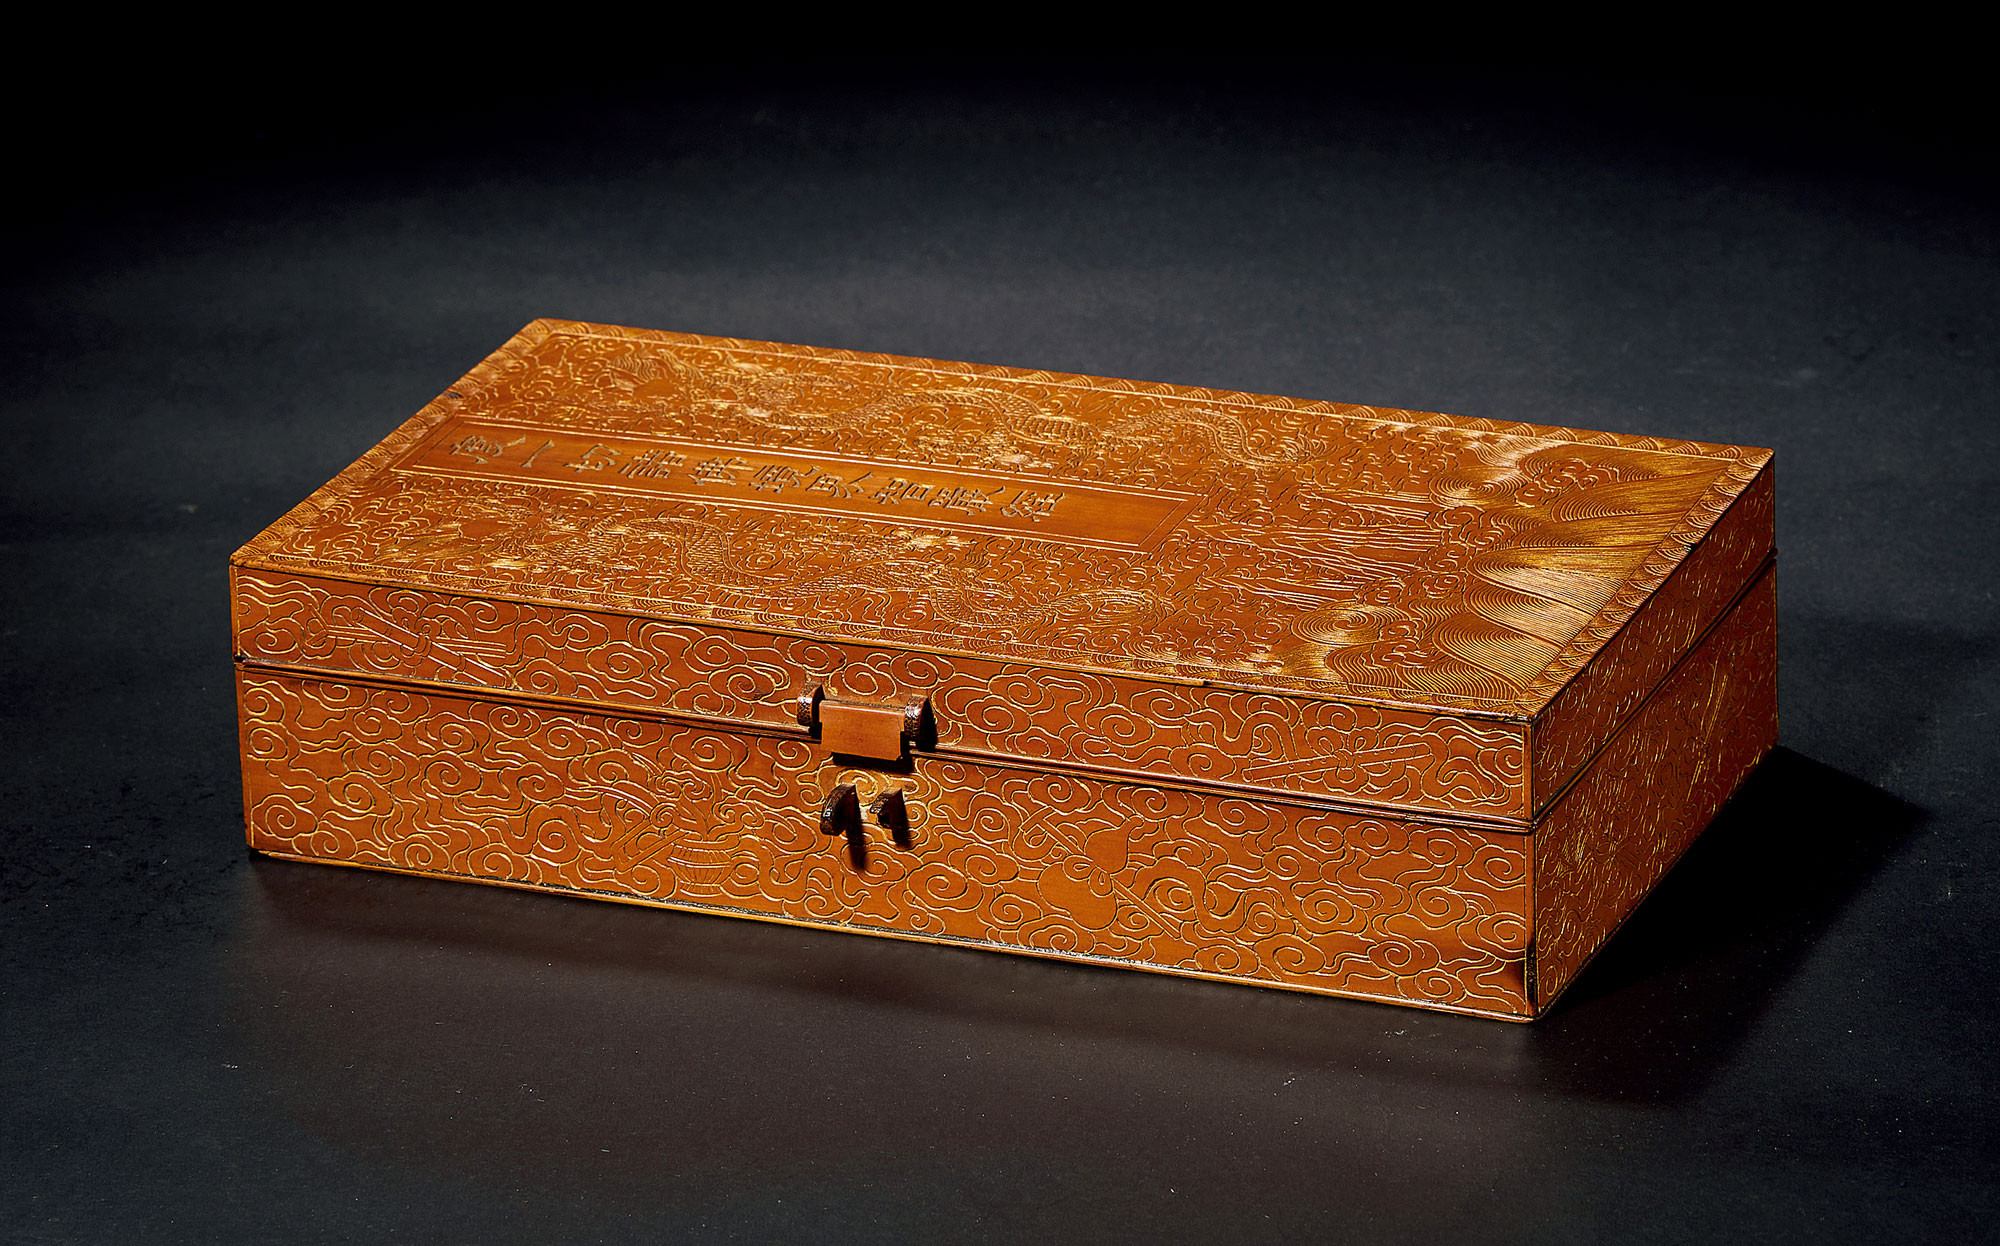 A BAMBOO VENEER ‘DRAGON’ SCRIPTURES BOX